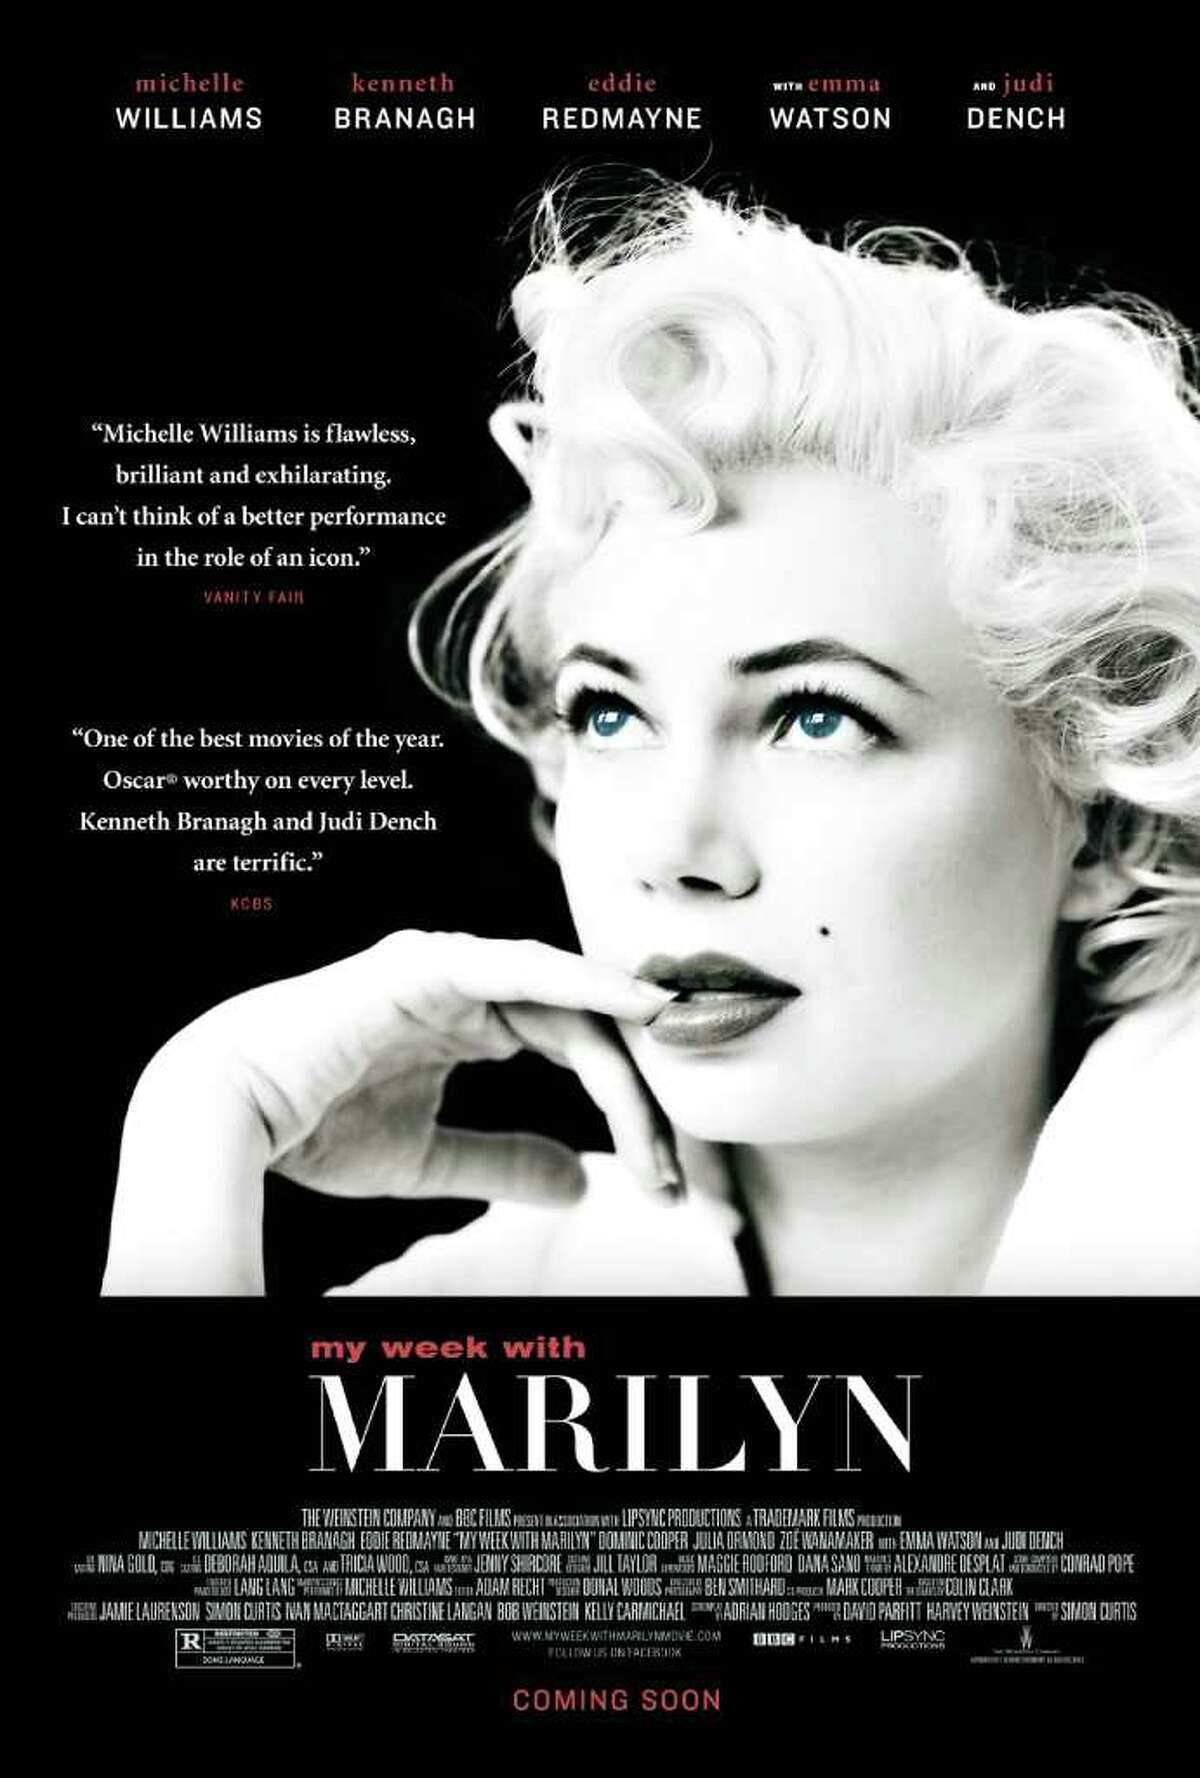 Michelle Williams plays Marilyn Monroe in My Week with Marilyn.